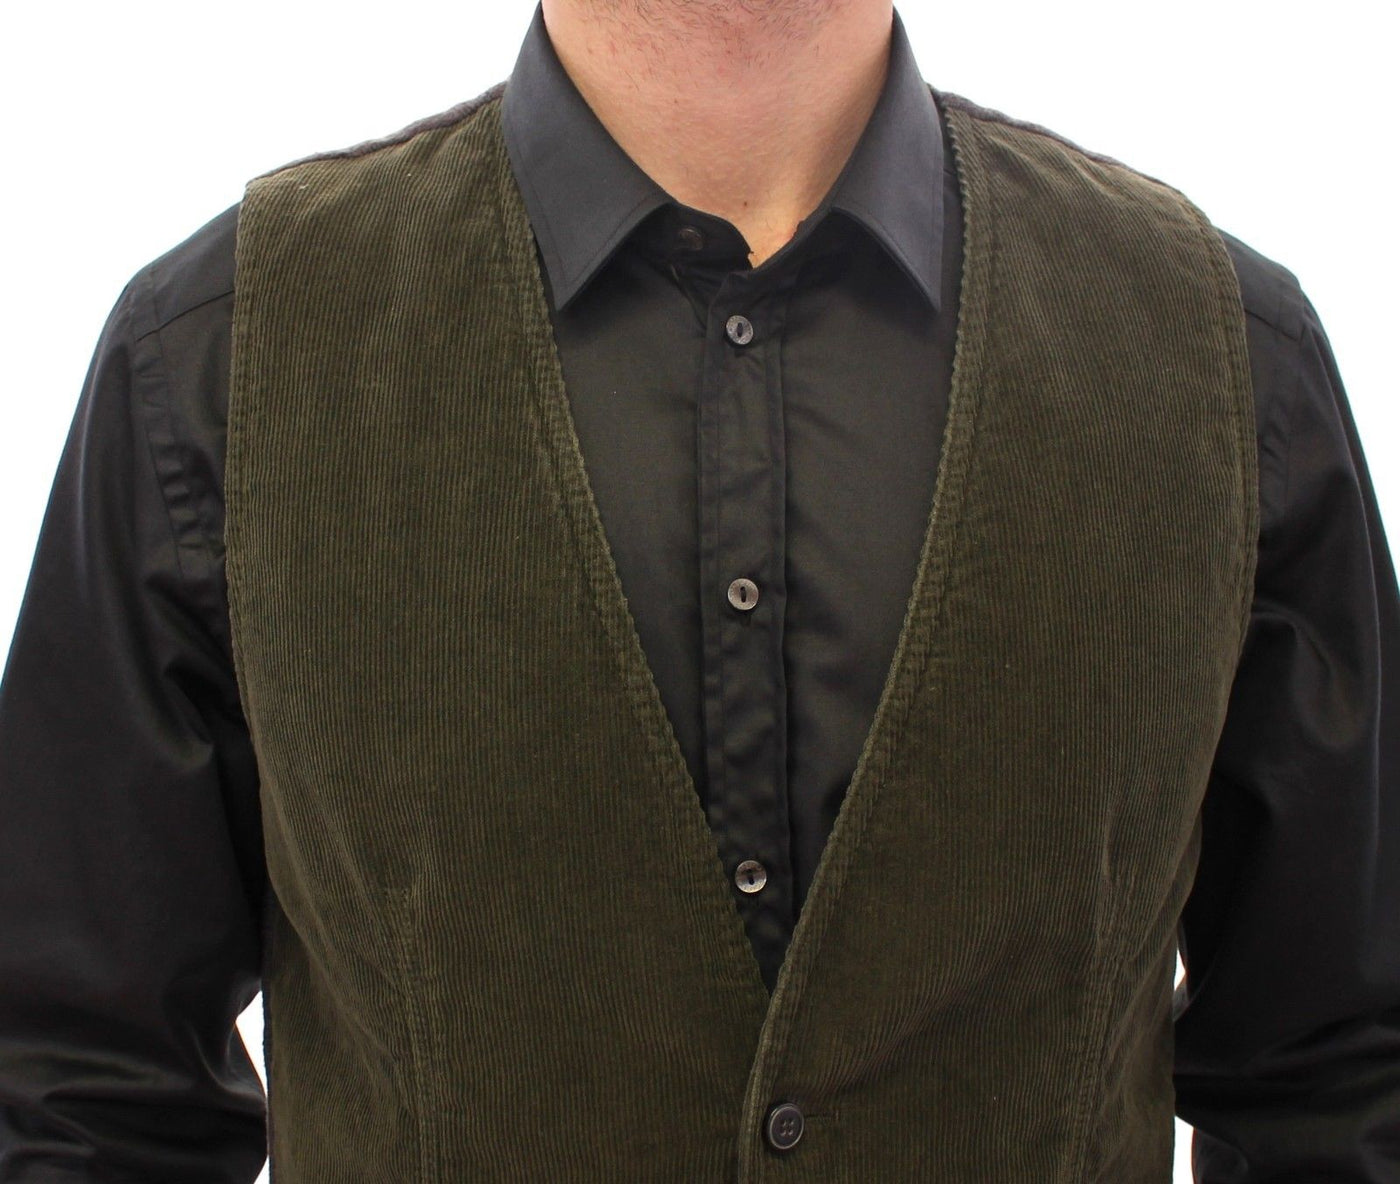 Dolce & Gabbana Green Corduroys Single Breasted Vest